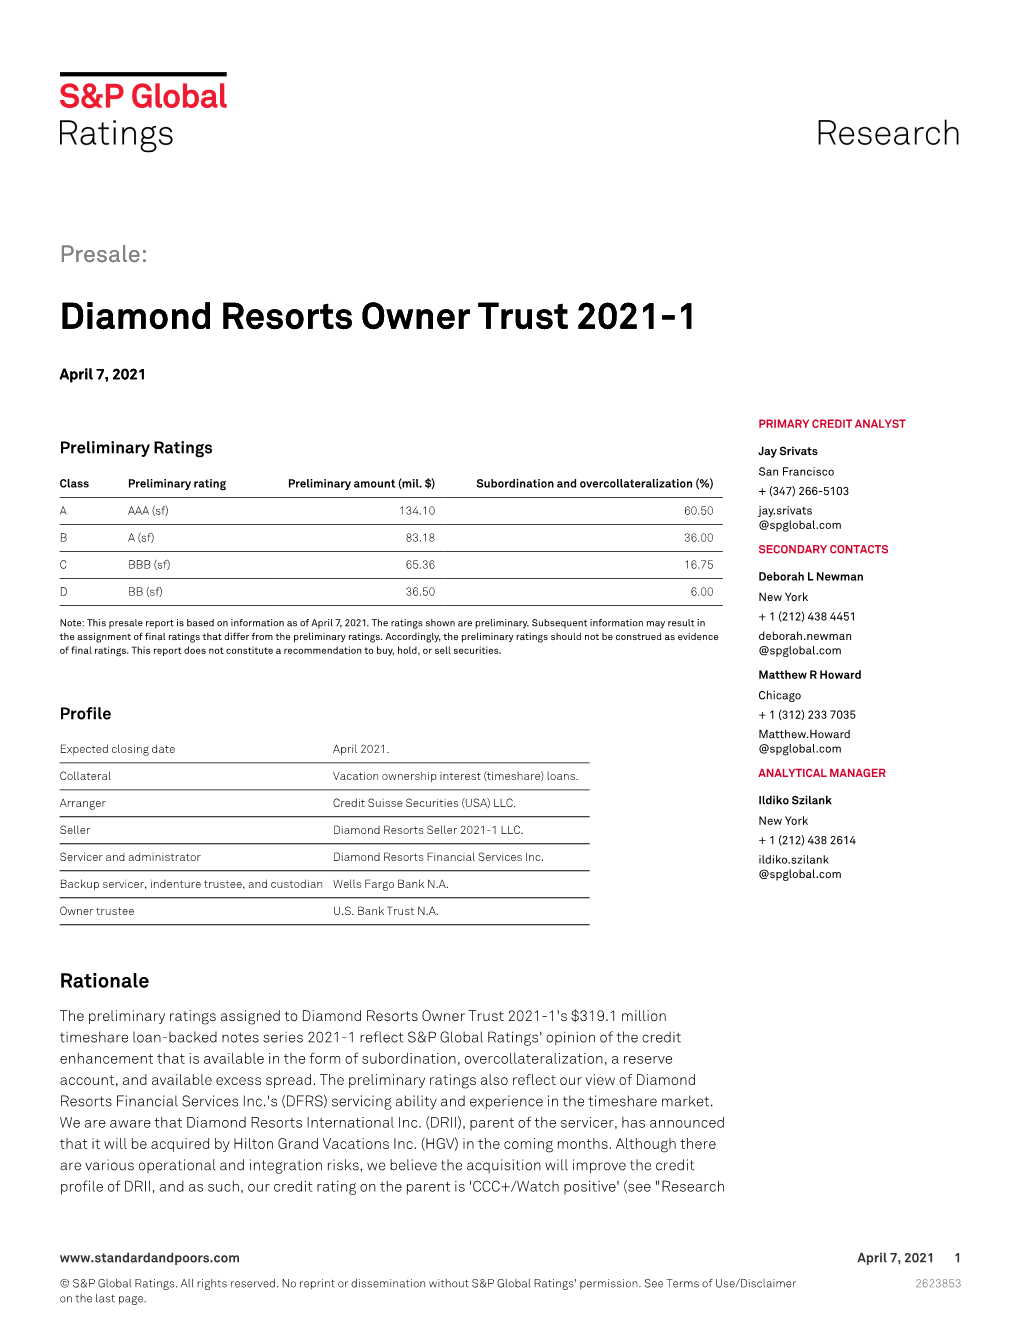 Diamond Resorts Owner Trust 2021-1